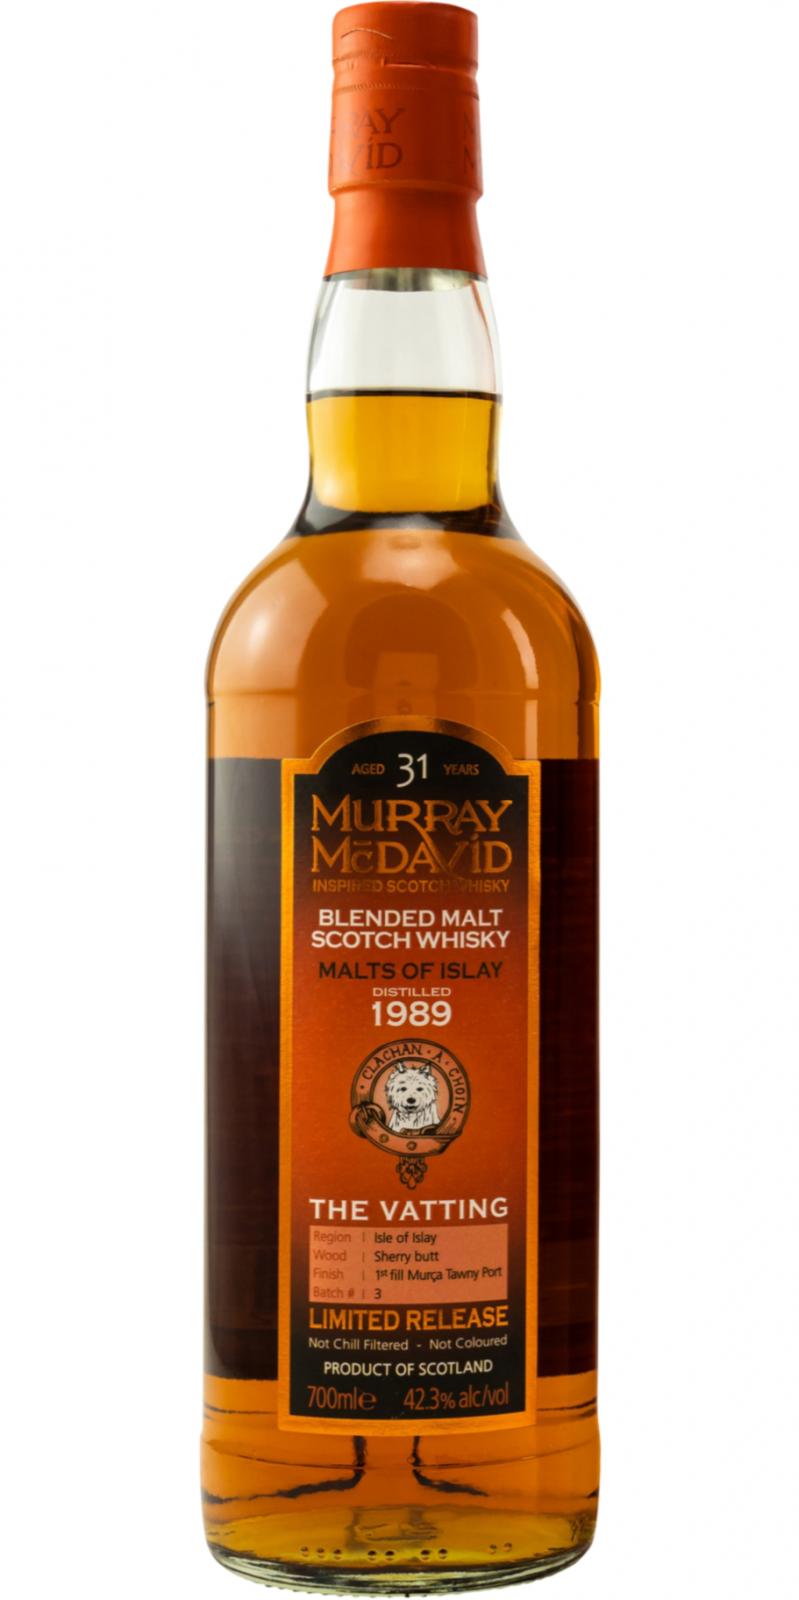 Blended Malt Scotch Whisky Malts of Islay MM